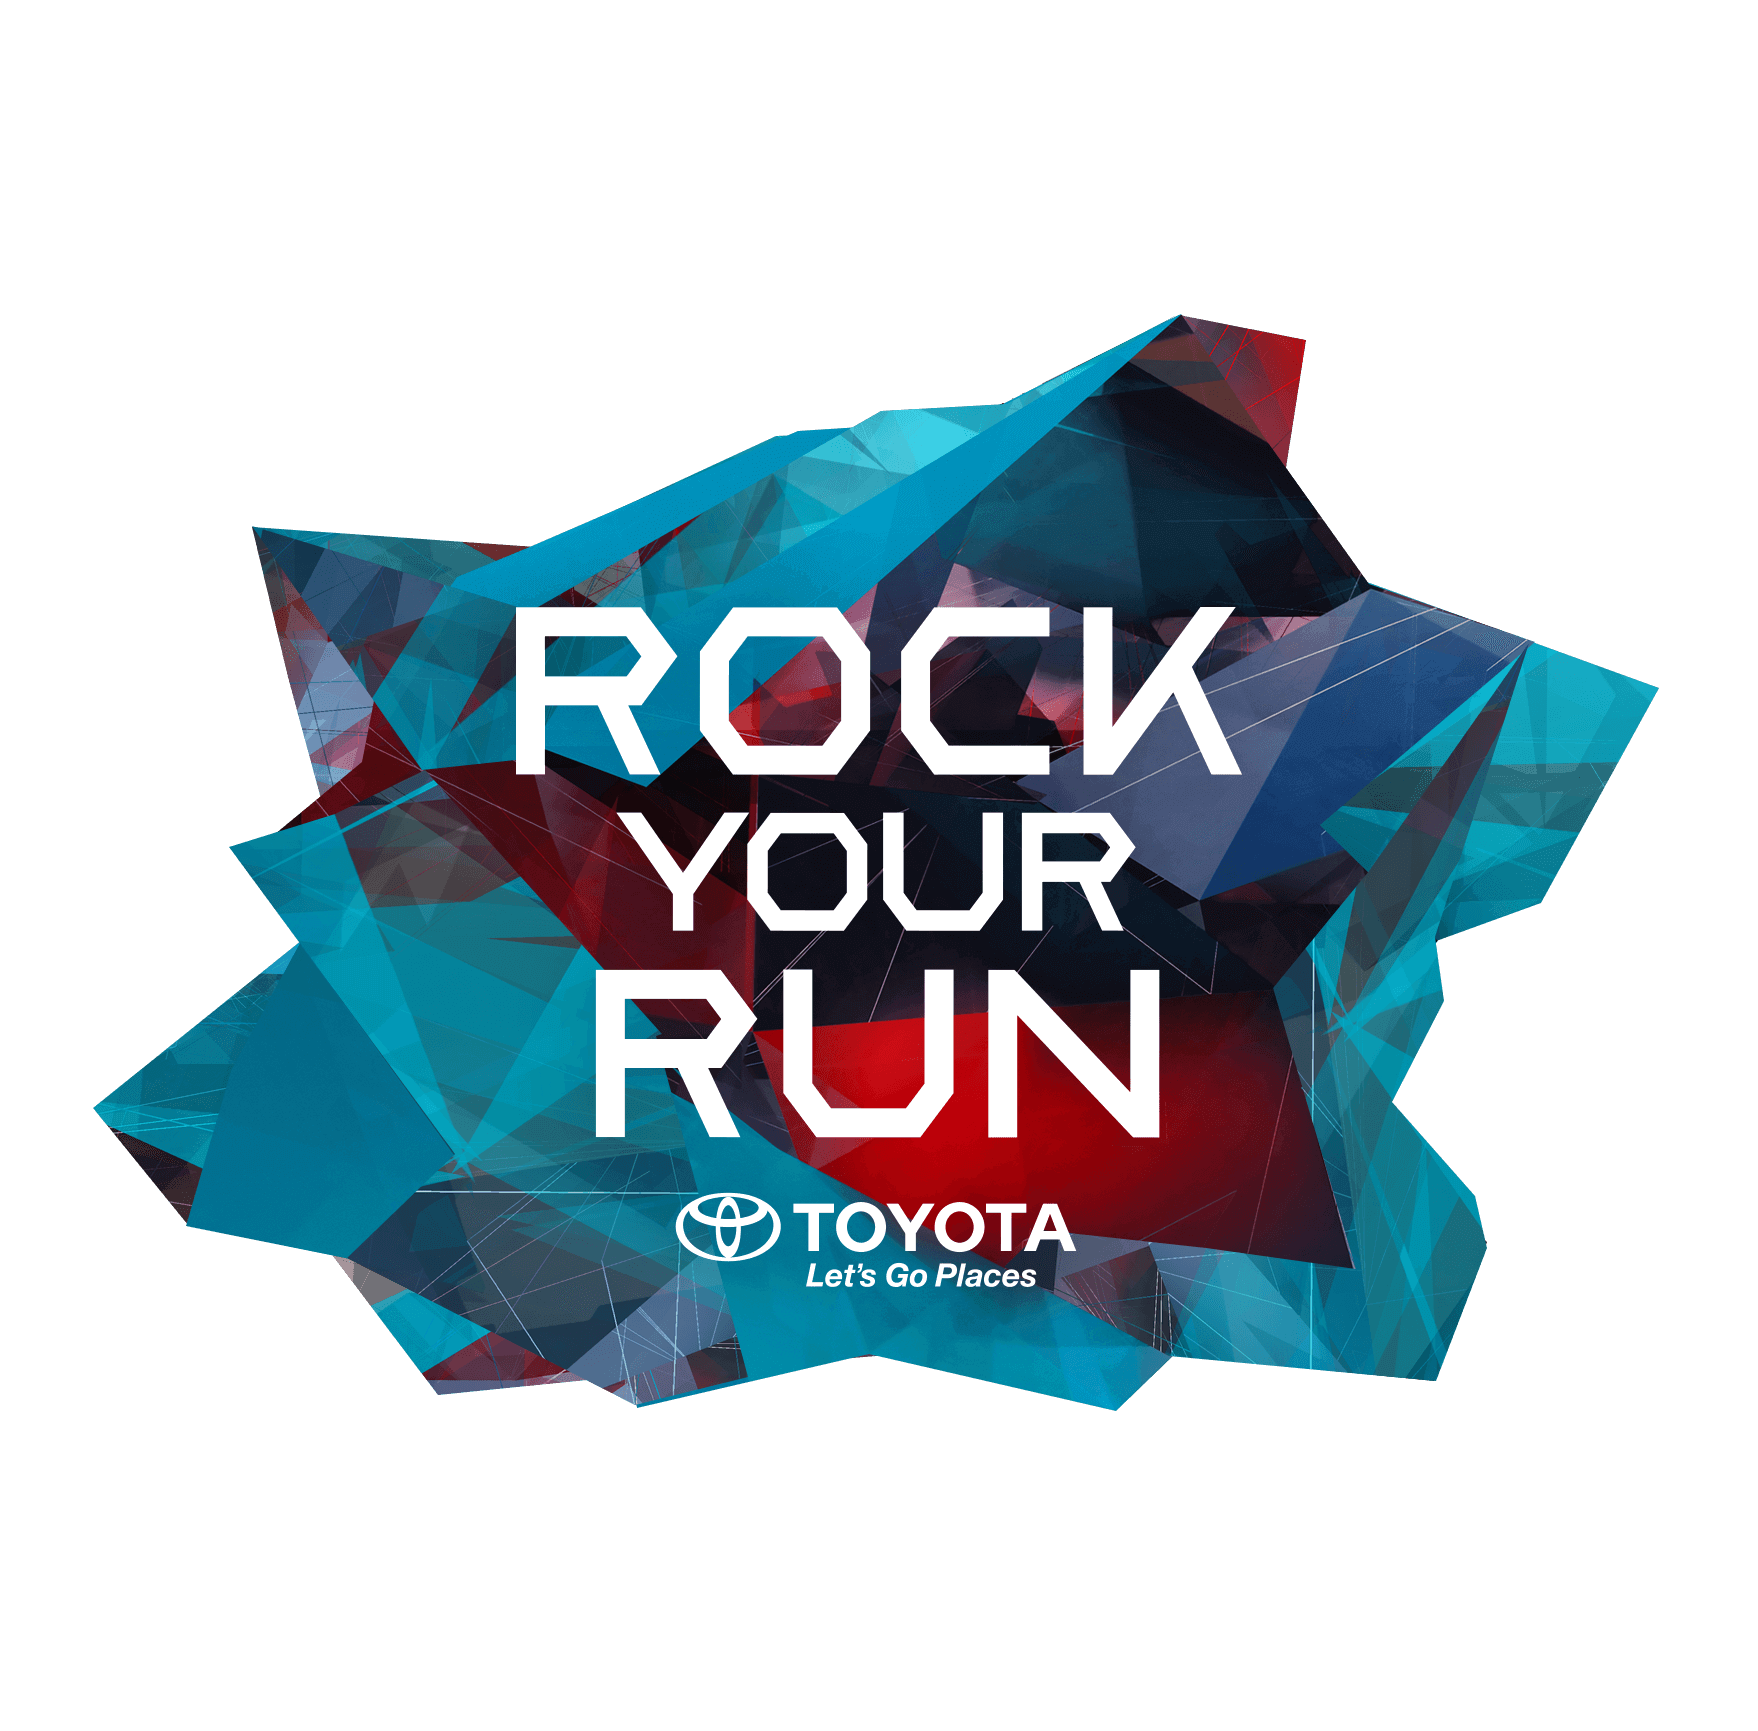 Toyota Rock Your Run Logo and Branding